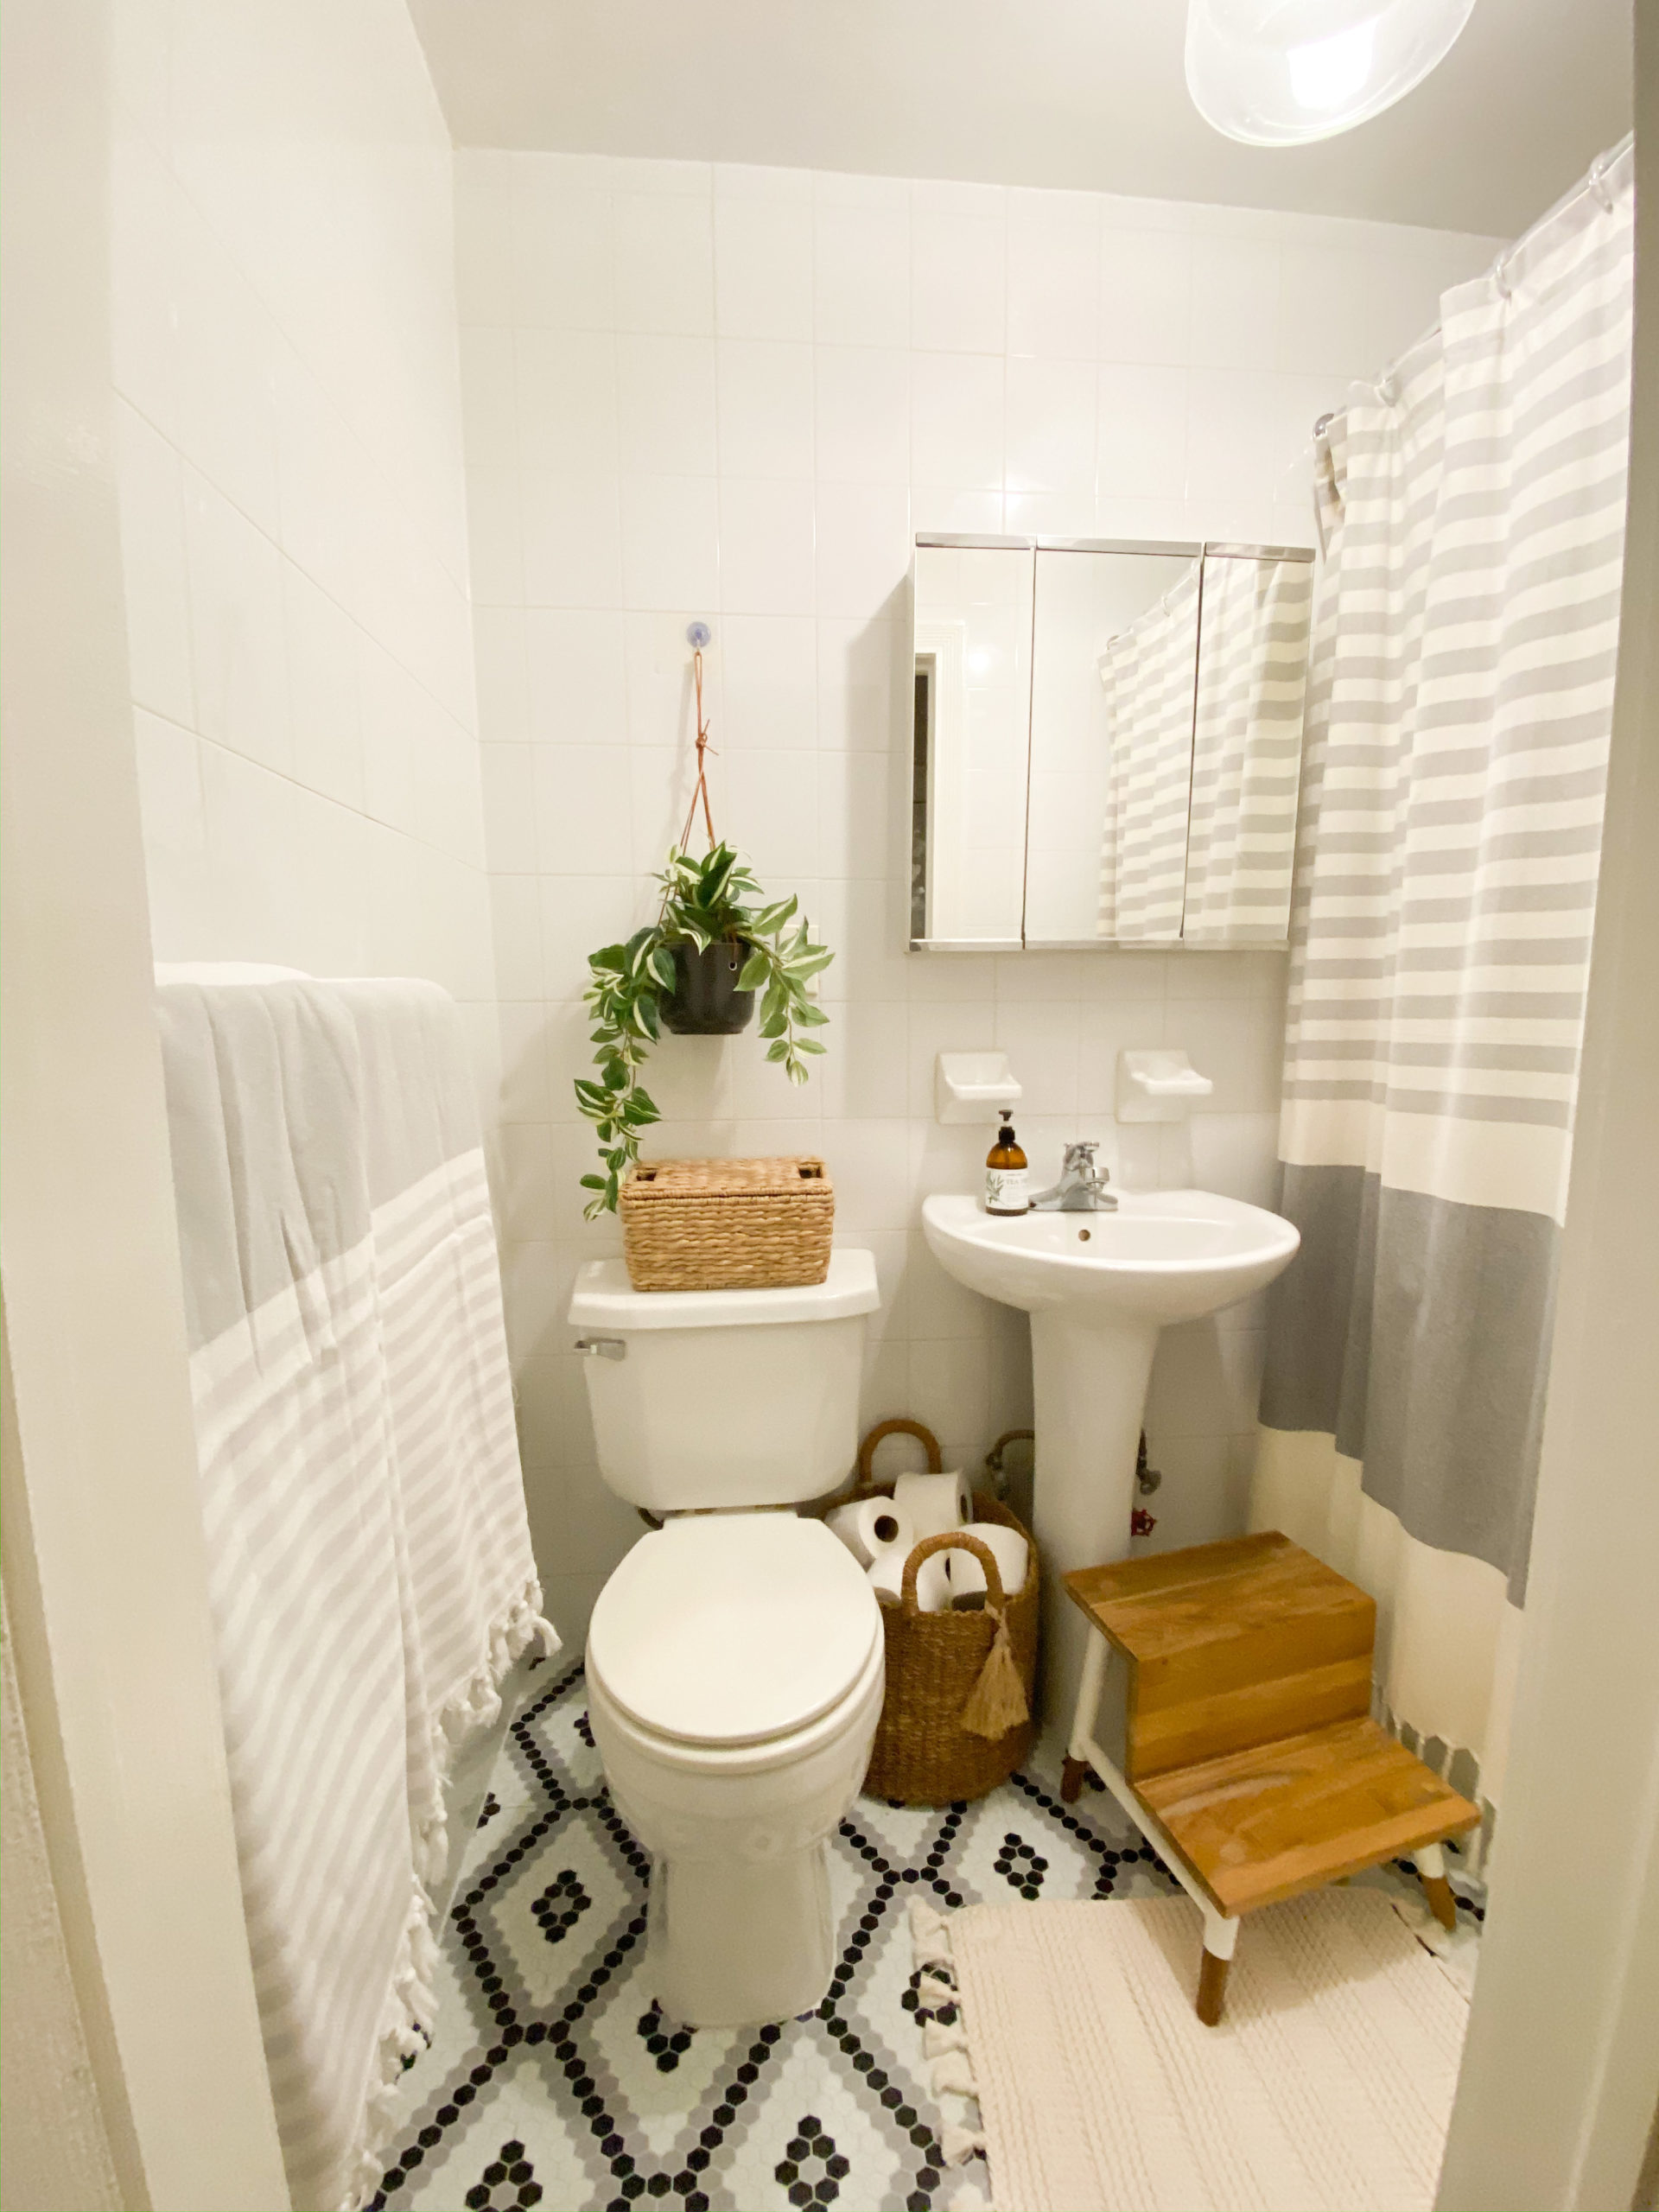 6 Must-Have Guest Bathroom Essentials - Organized-ish  Guest bathroom  essentials, Small bathroom decor, Bathroom decor